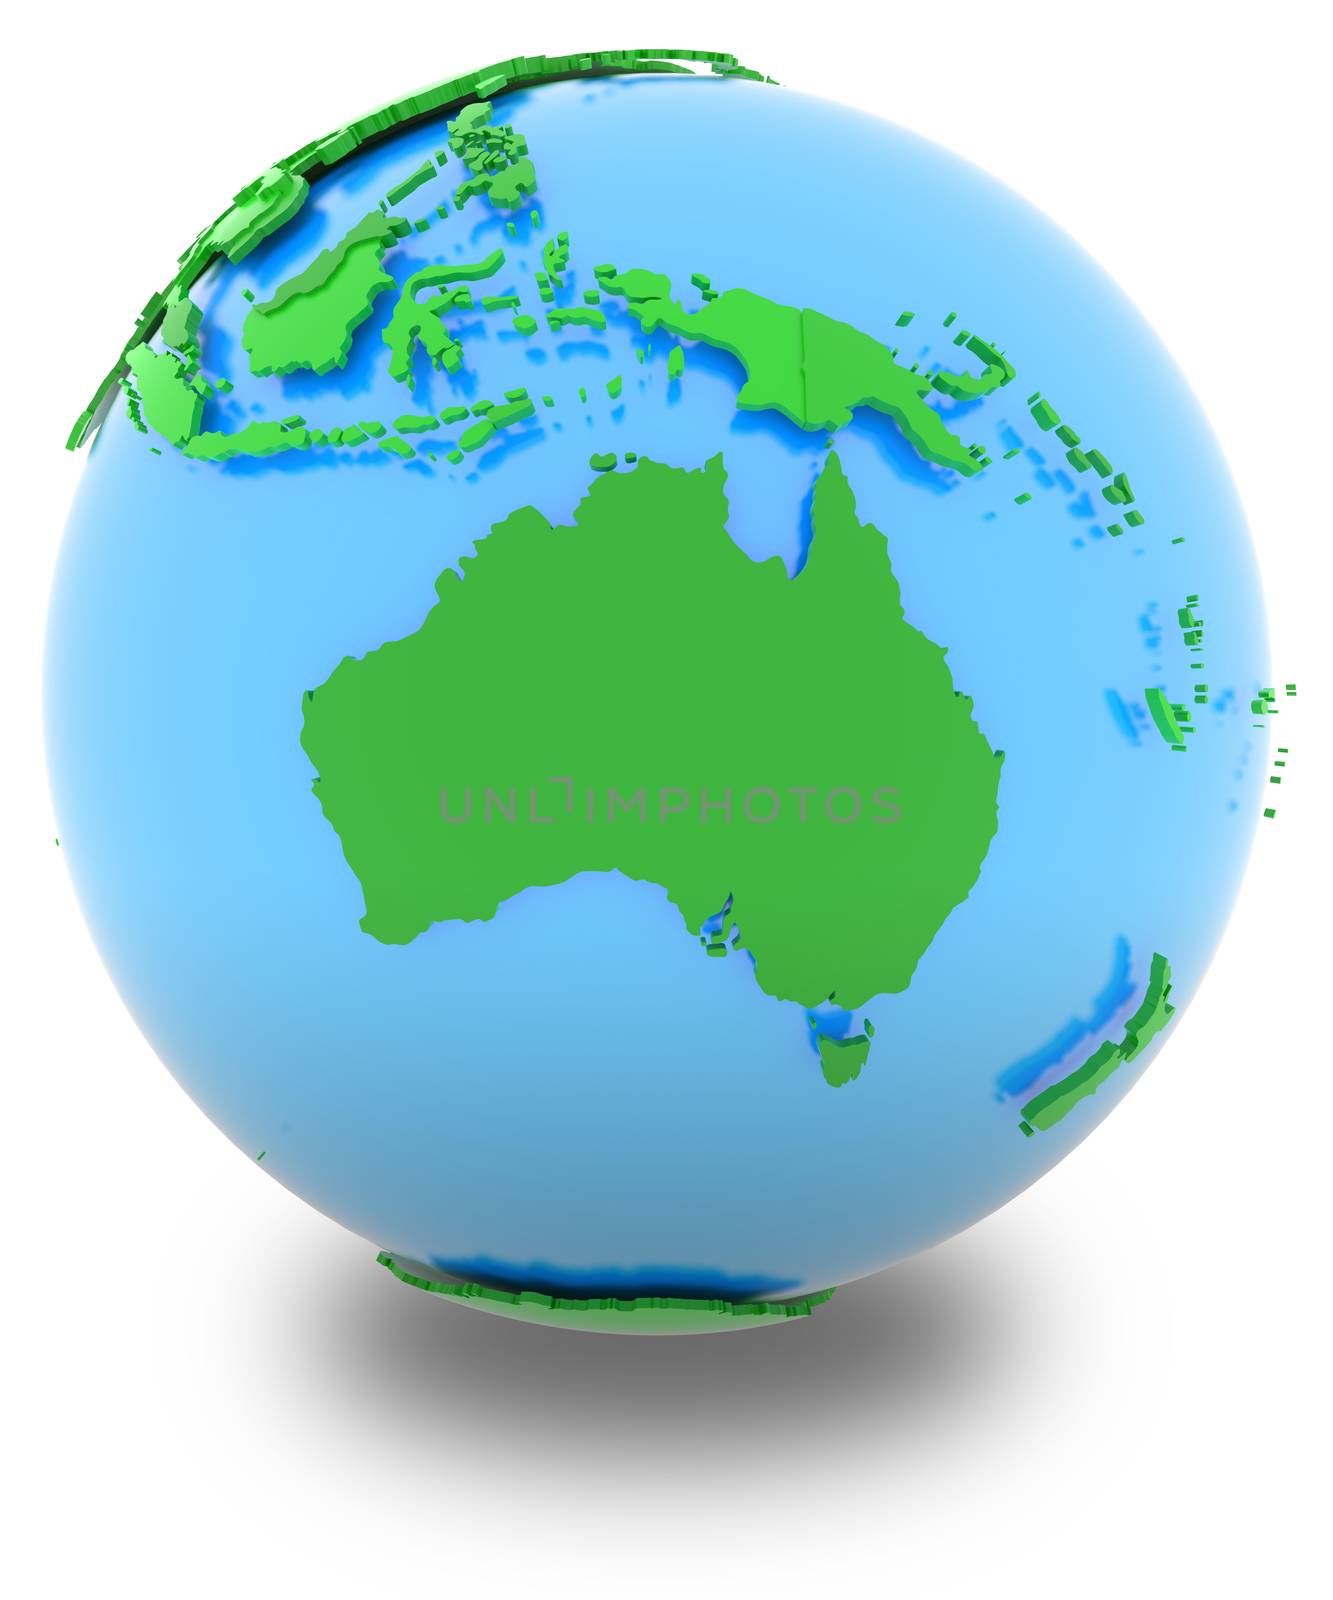 Australia on the globe by Harvepino